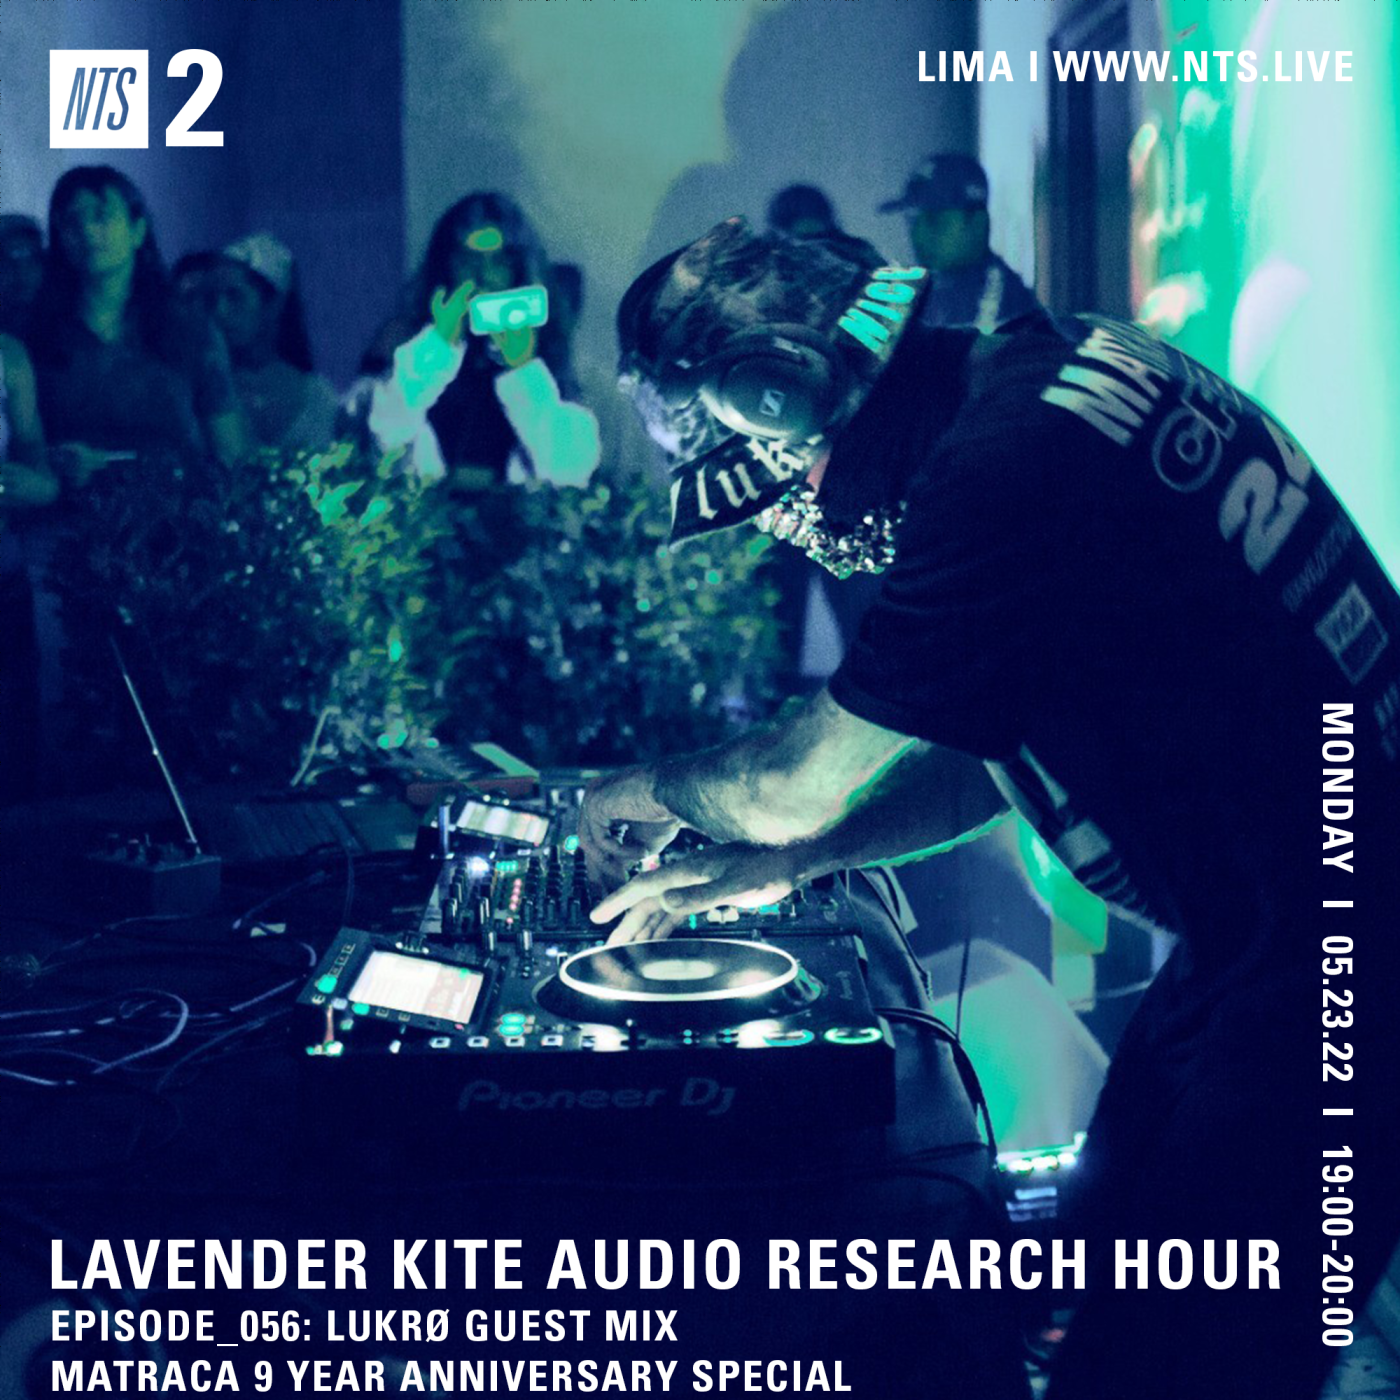 Lavender Kite Audio Research Hour w/ Lukrø